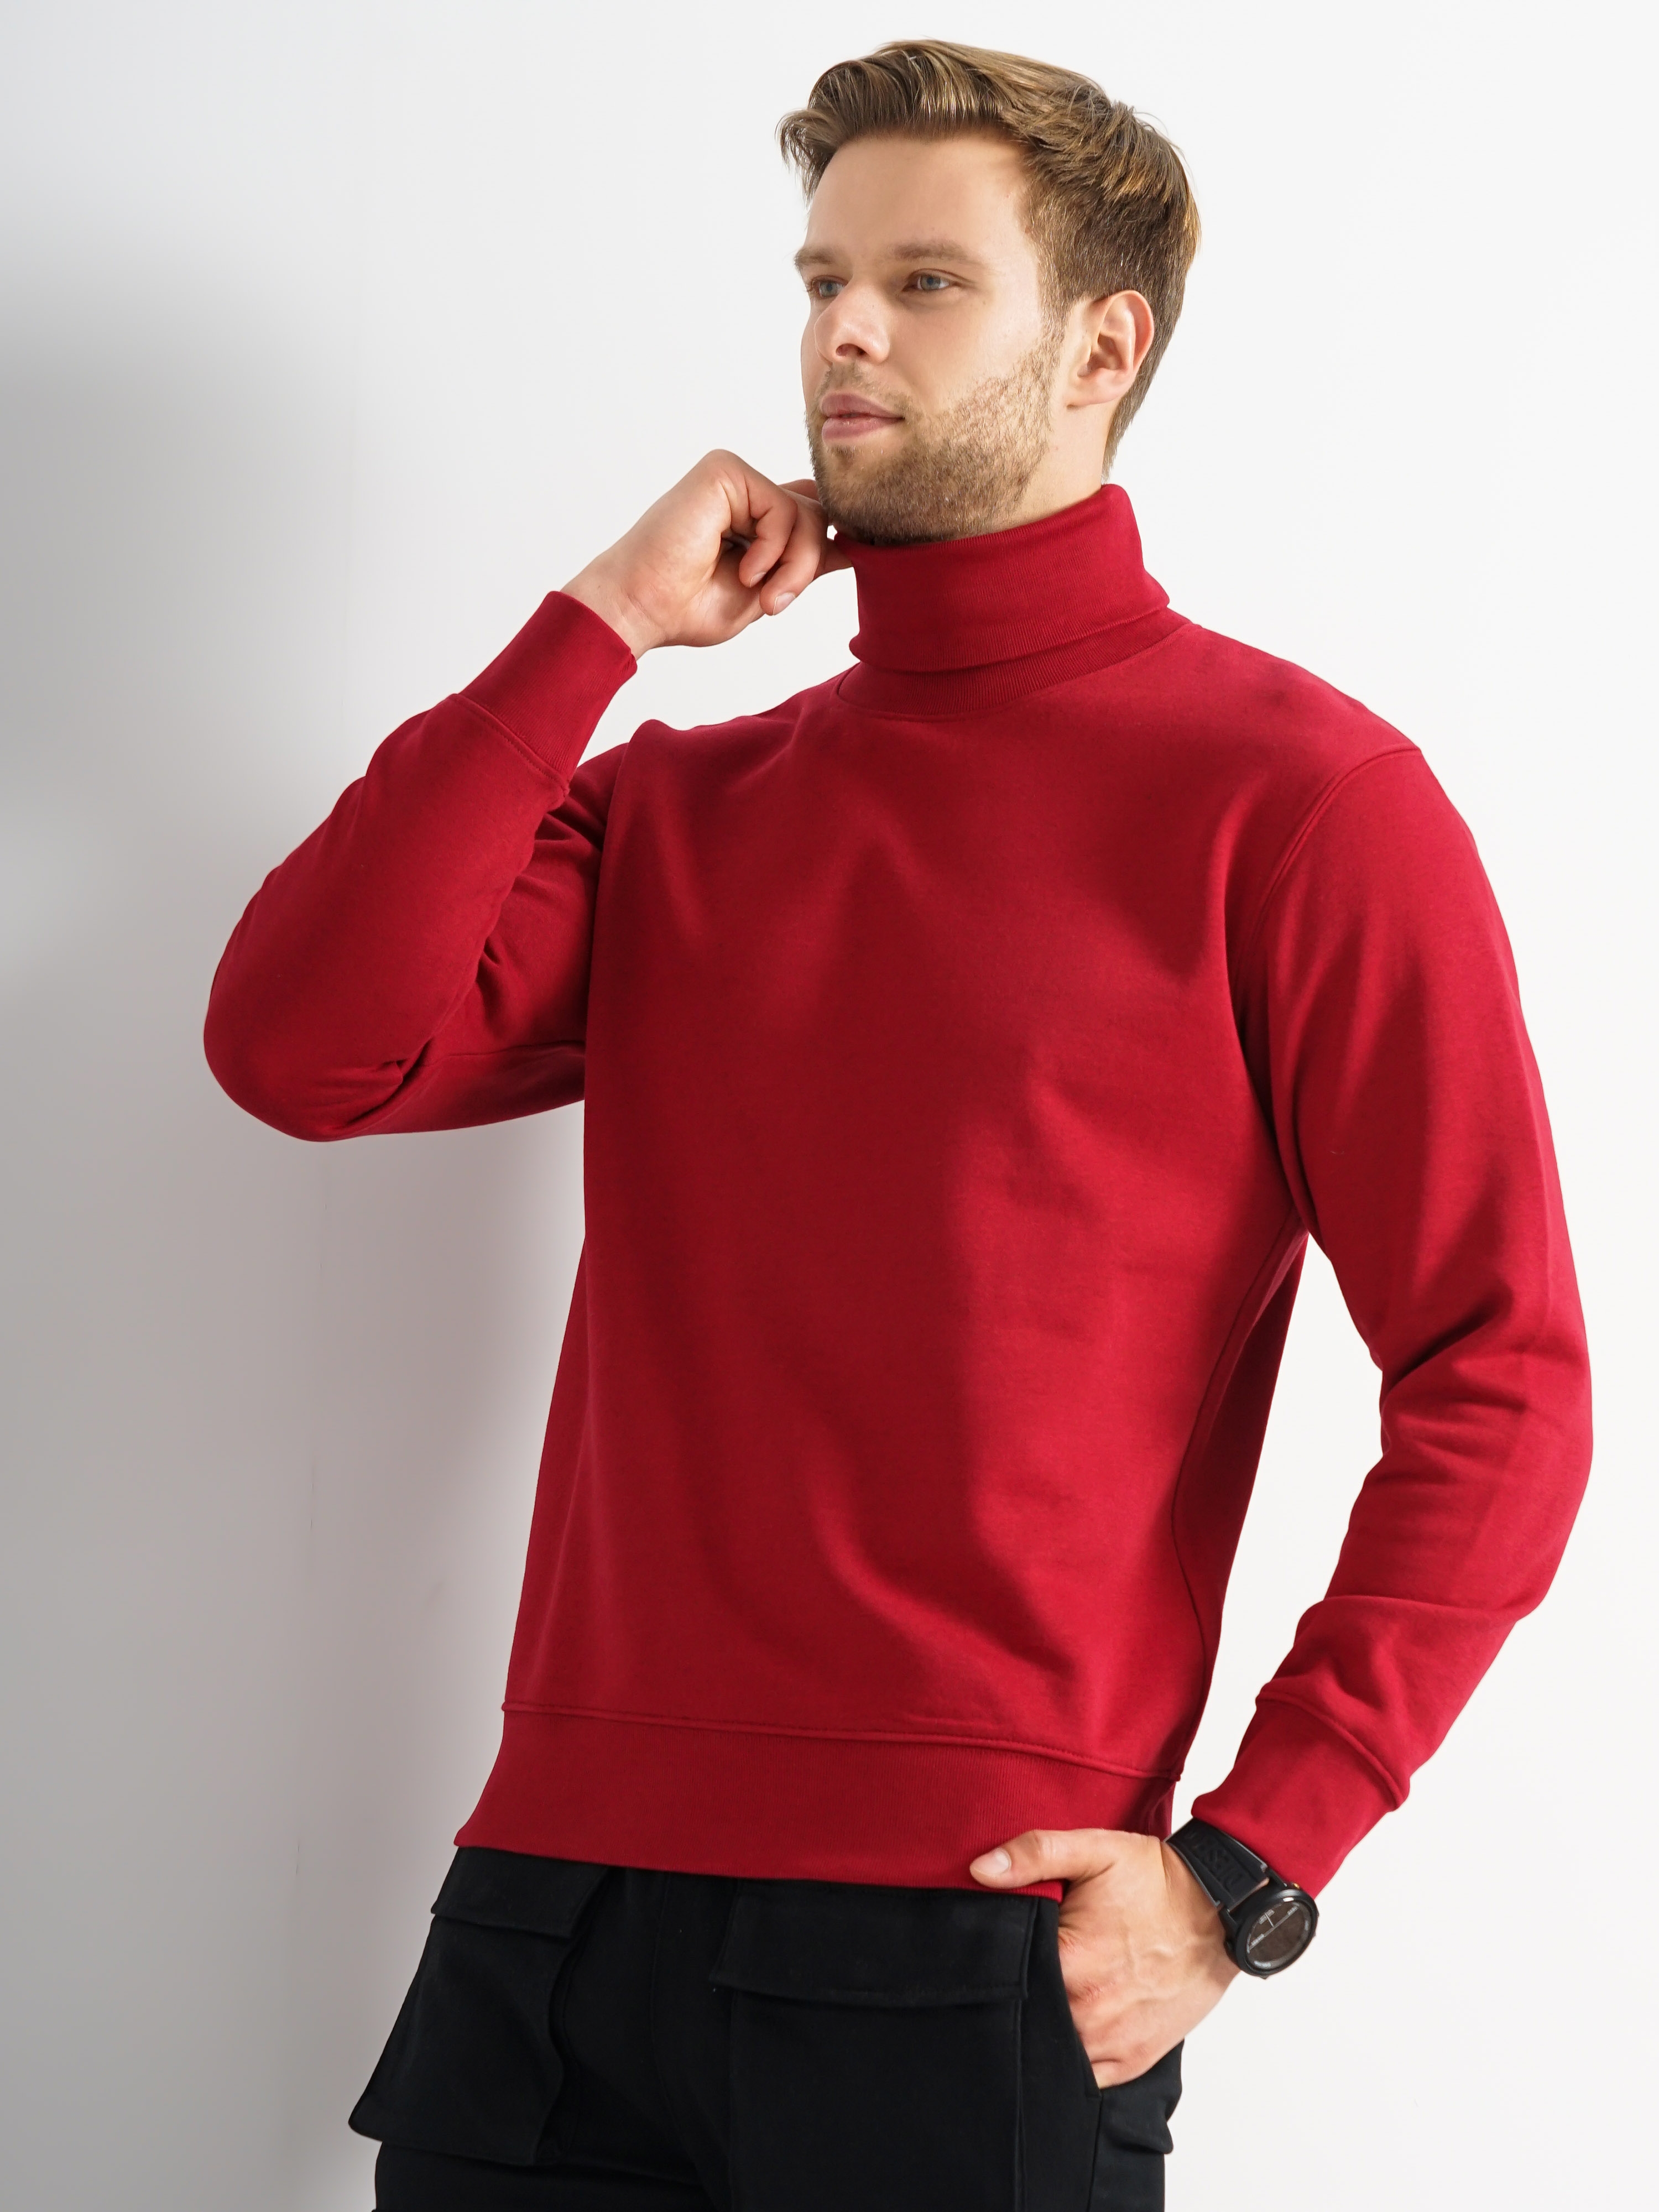 Men's Red Knitted Sweatshirts